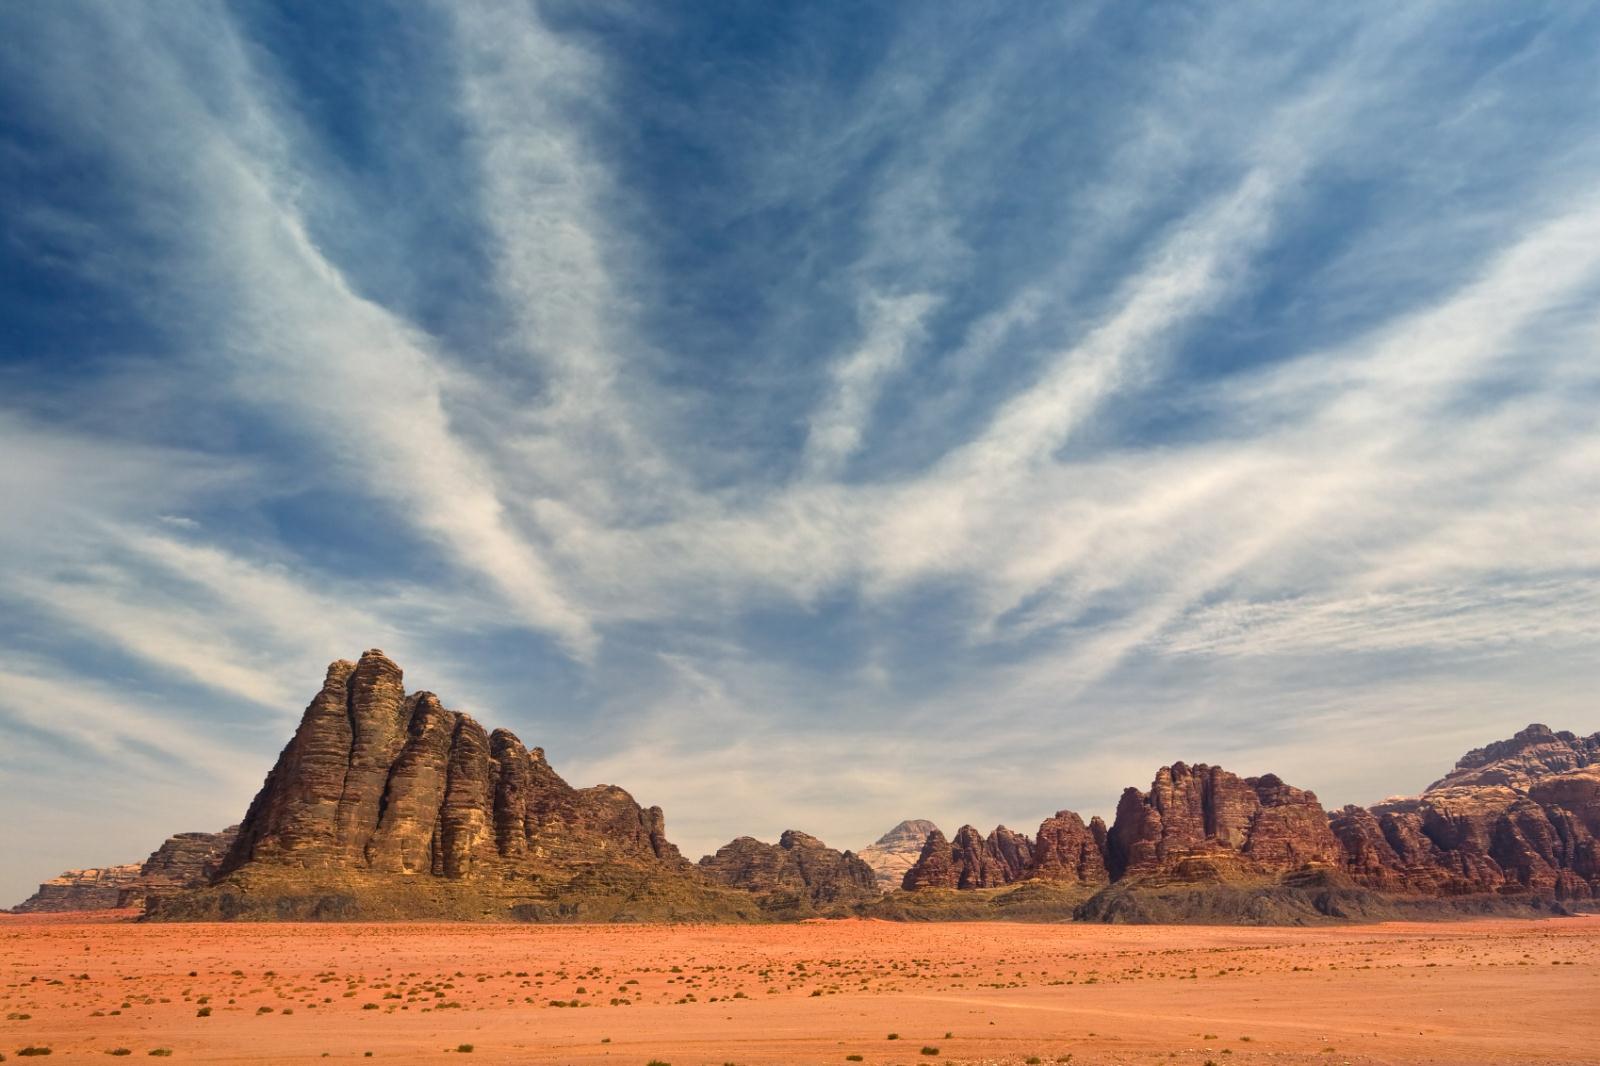 Desert - Wadi Rum Desert Camp